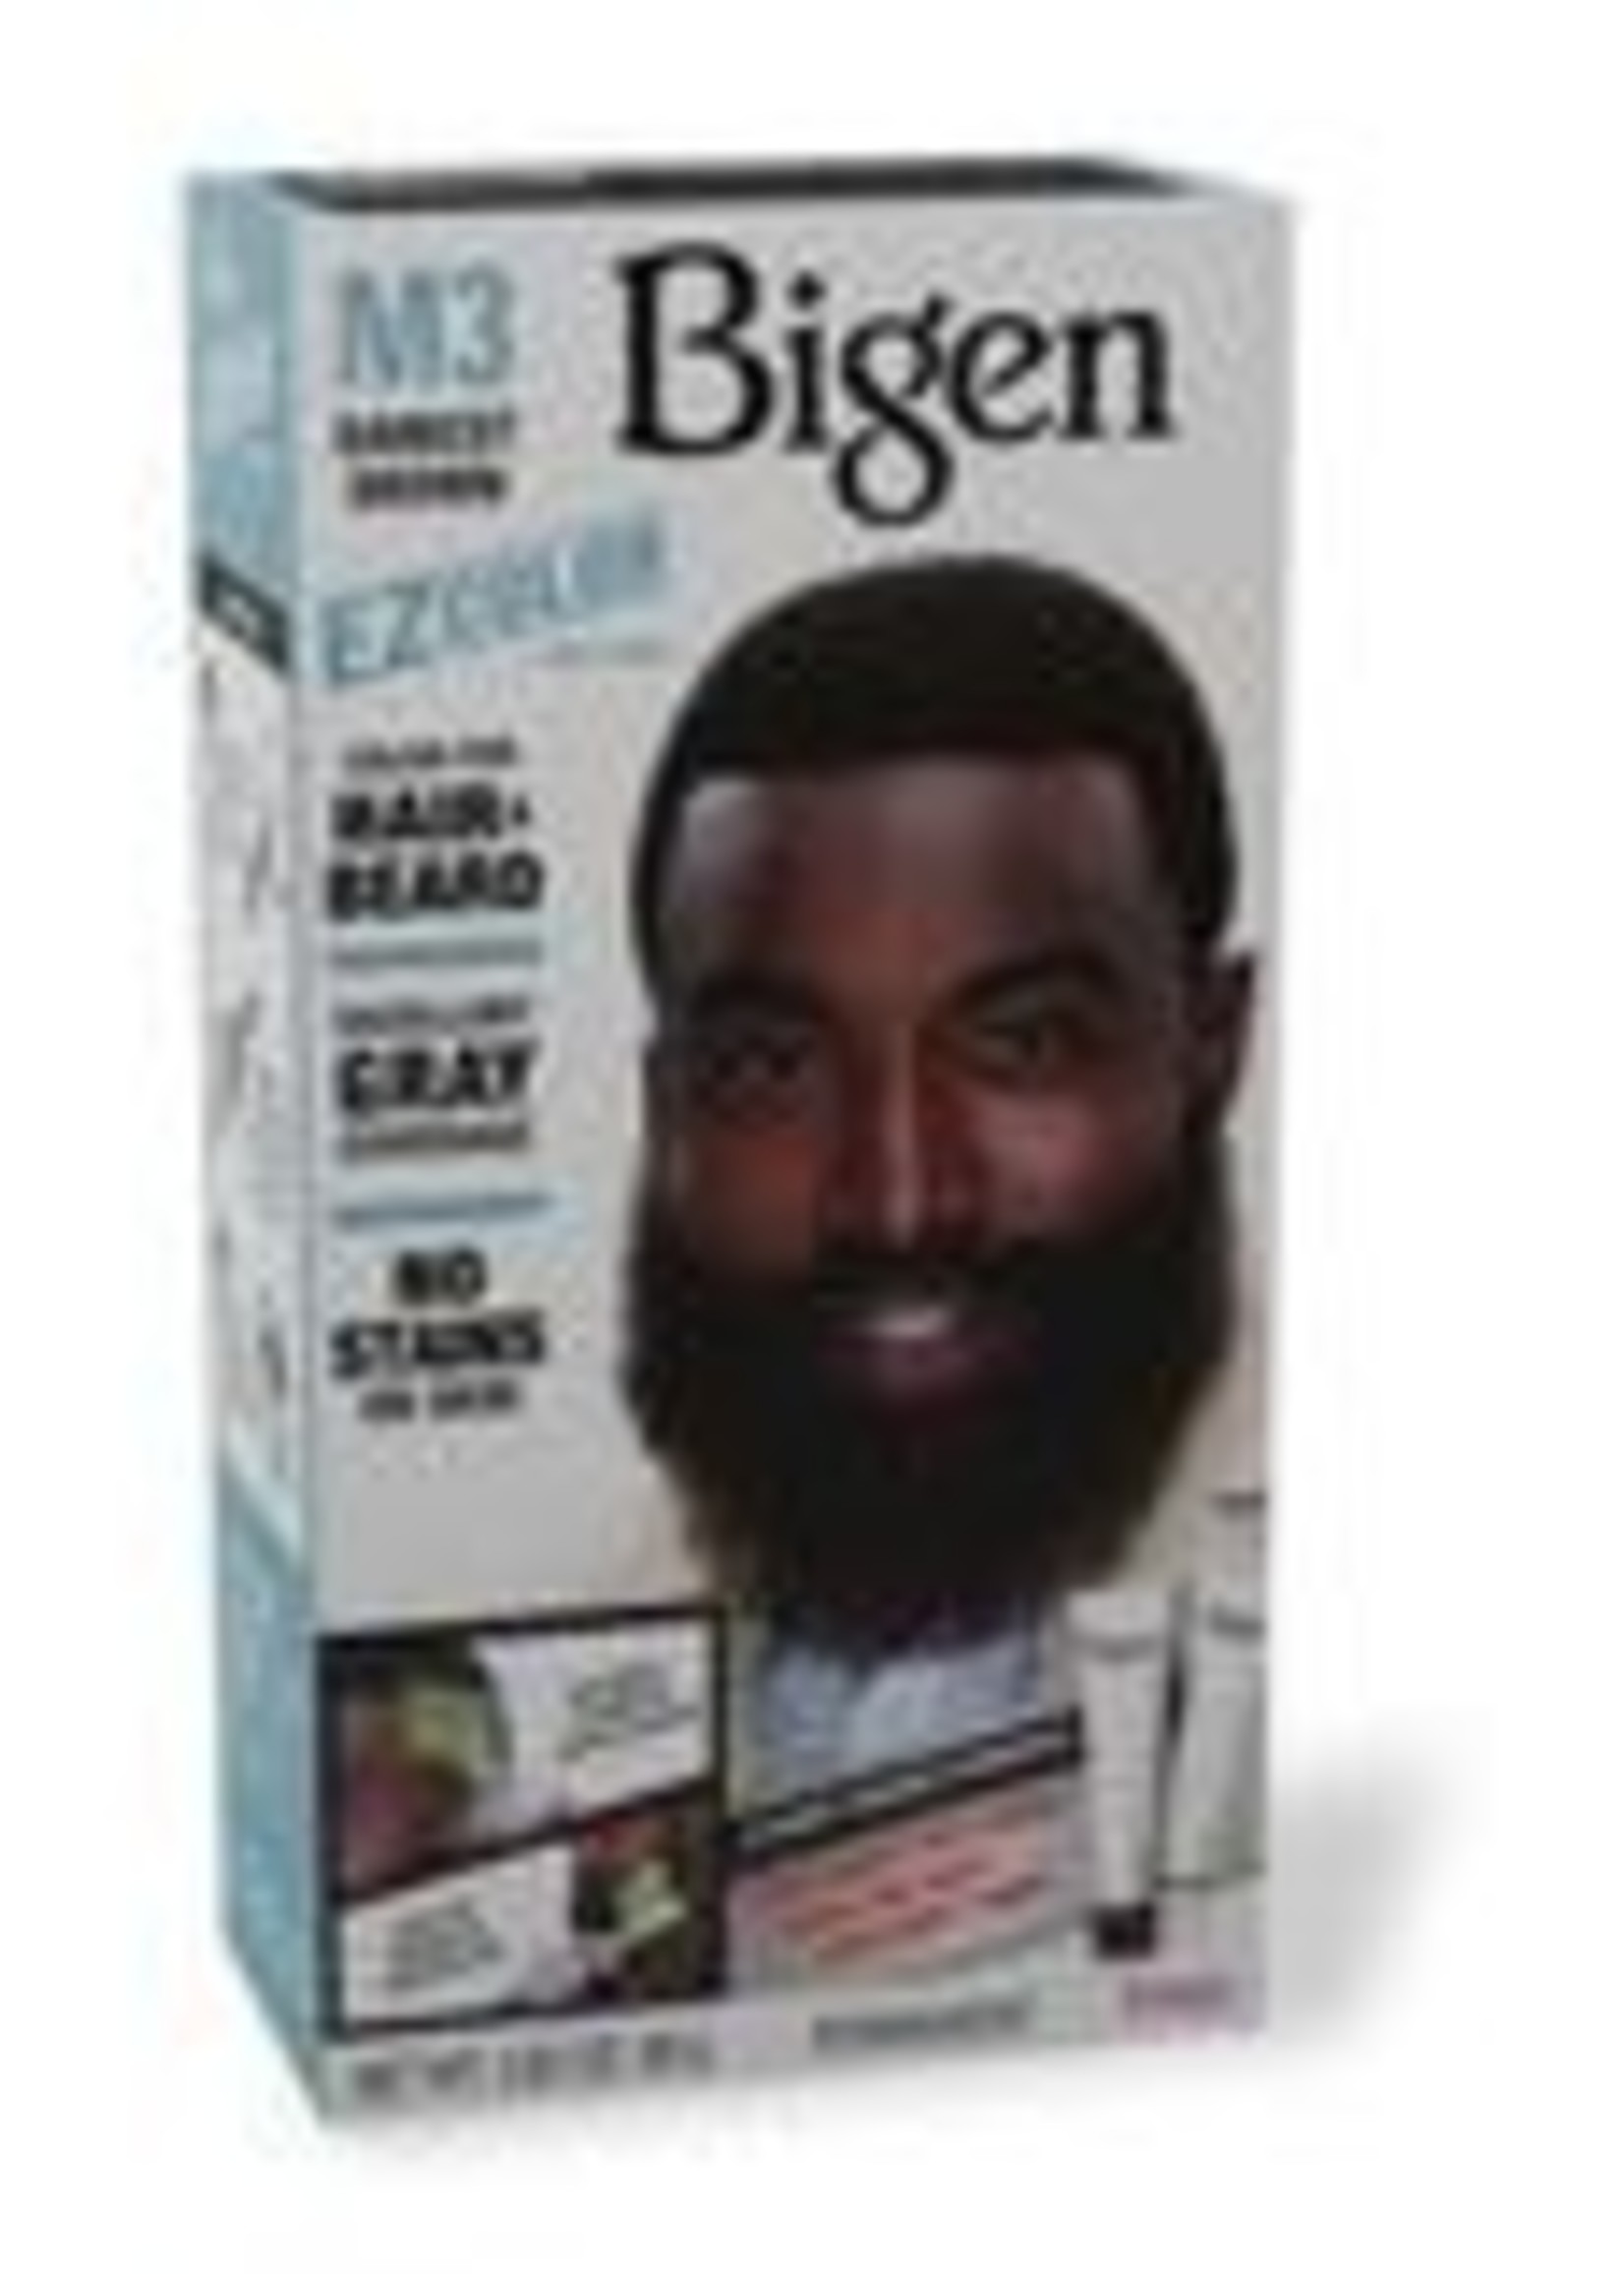 Bigen Men's Beard & Hair Dye EZ Color